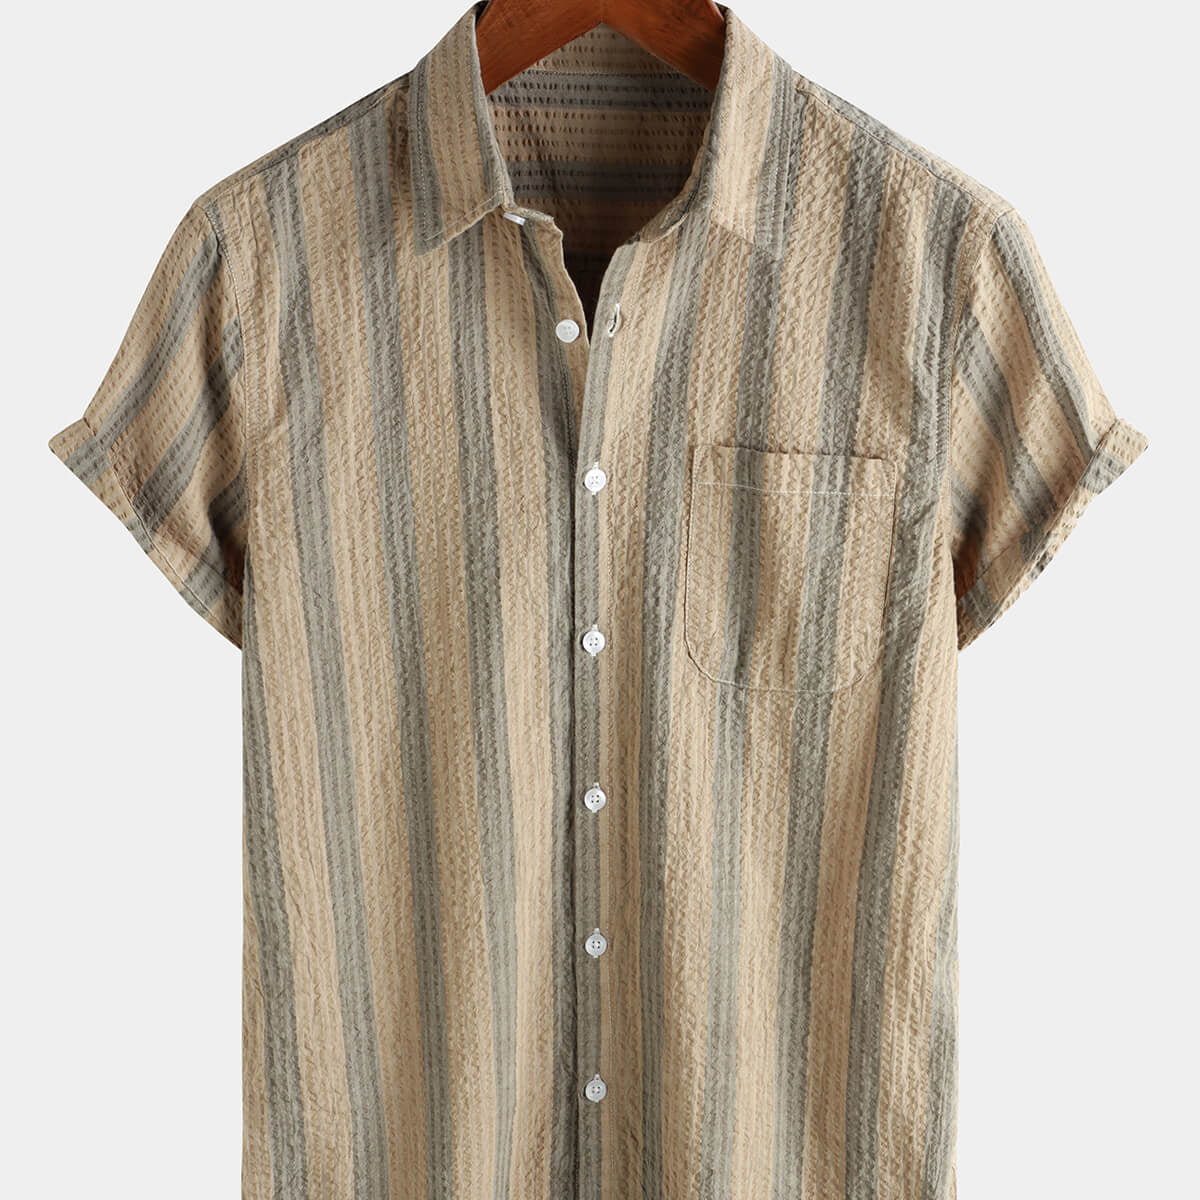 Men's Striped Cotton Casual Pocket Hawaiian Holiday Button Up Short Sleeve Shirt